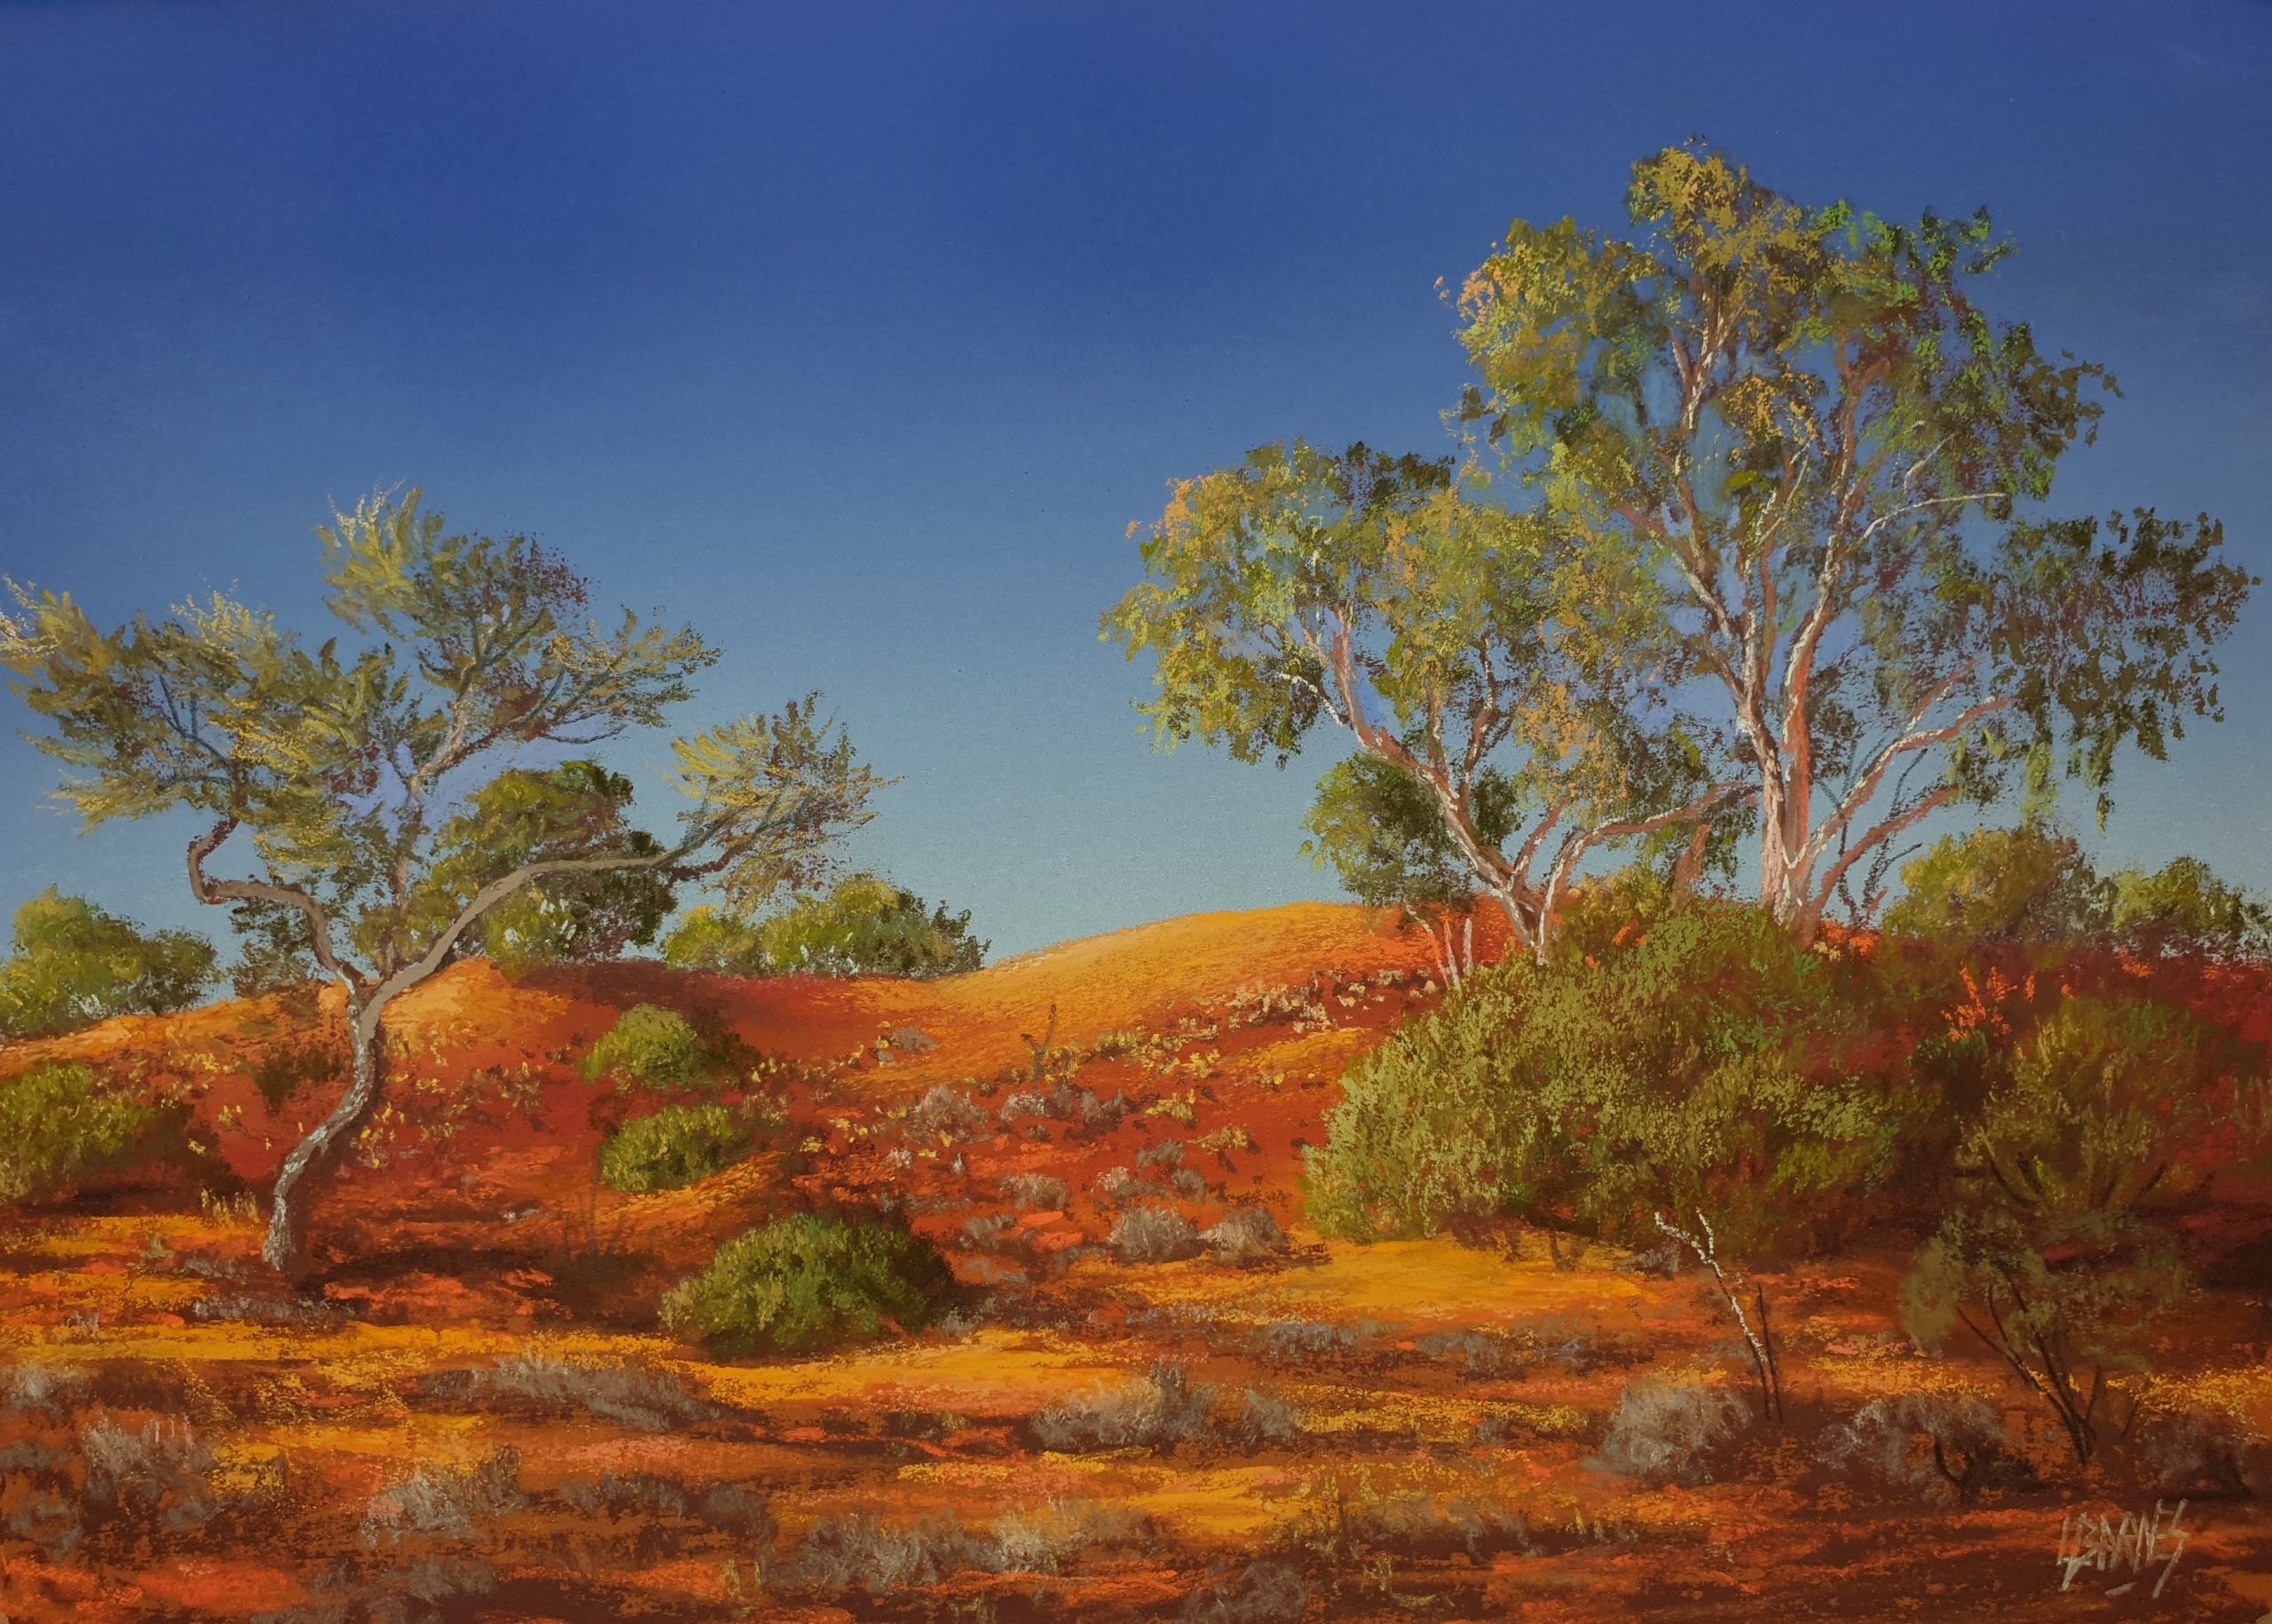 Sandhill on Nockatunga Pastel on Paper 330 mm x 240mm $975.00